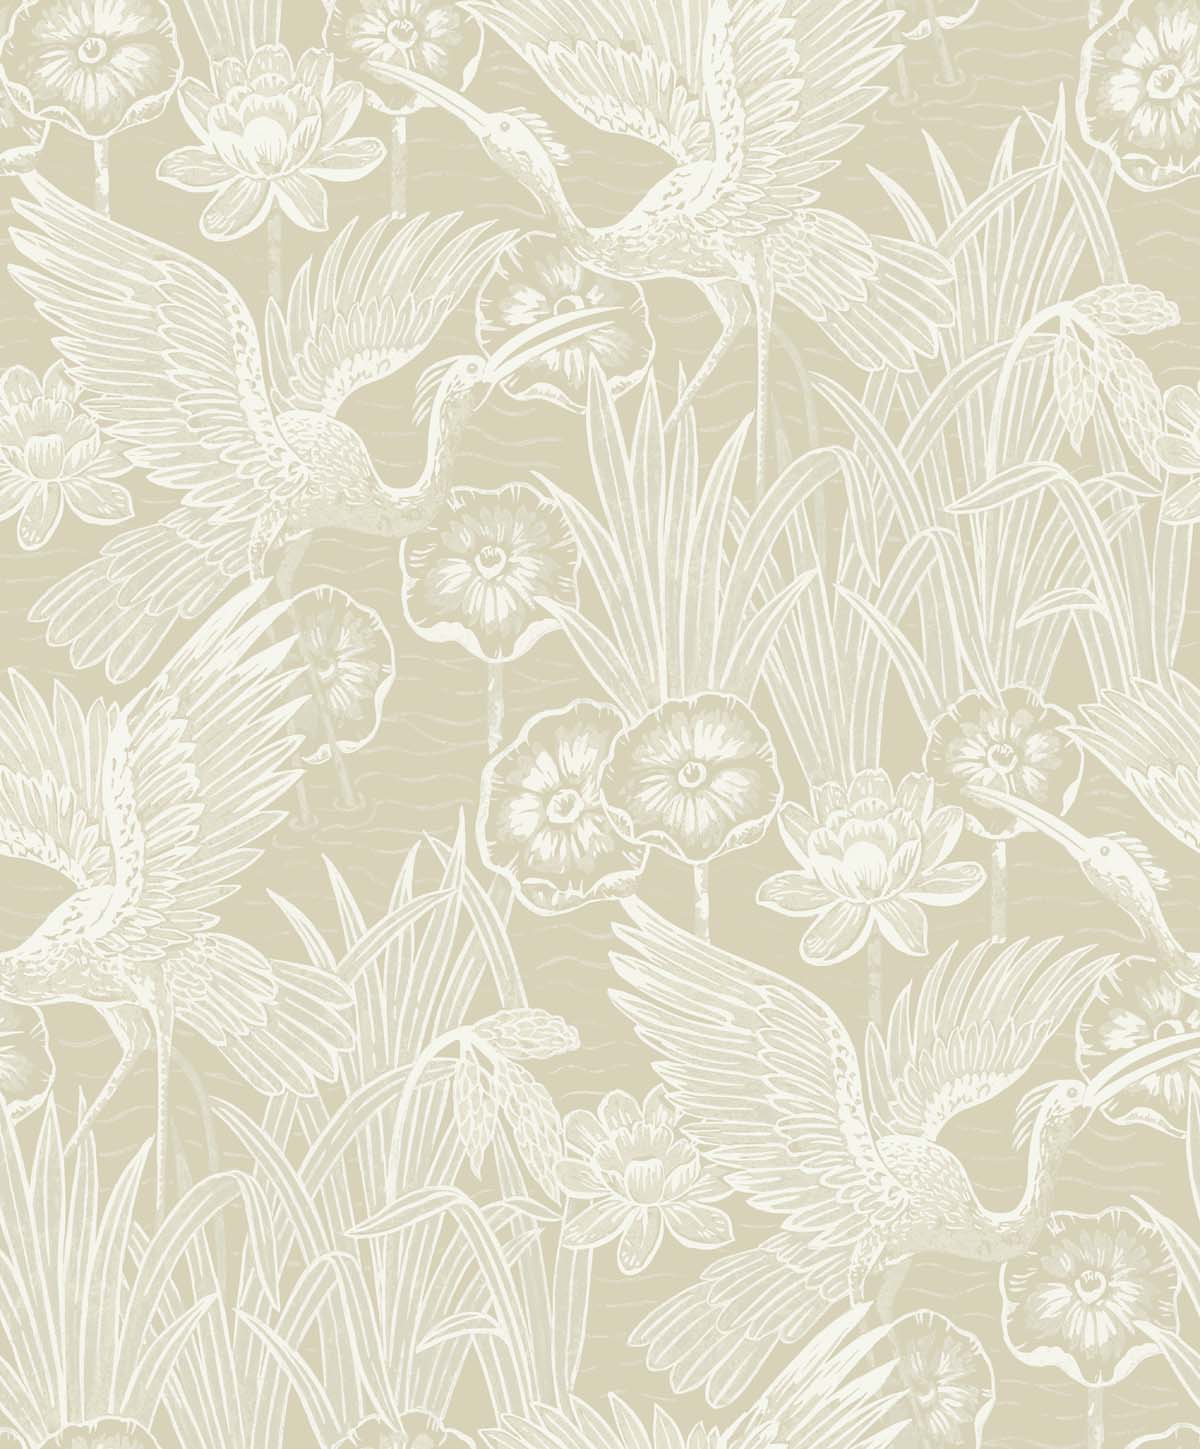 EW11005 | Marsh Cranes, Beige - Seabrook Designs Wallpaper